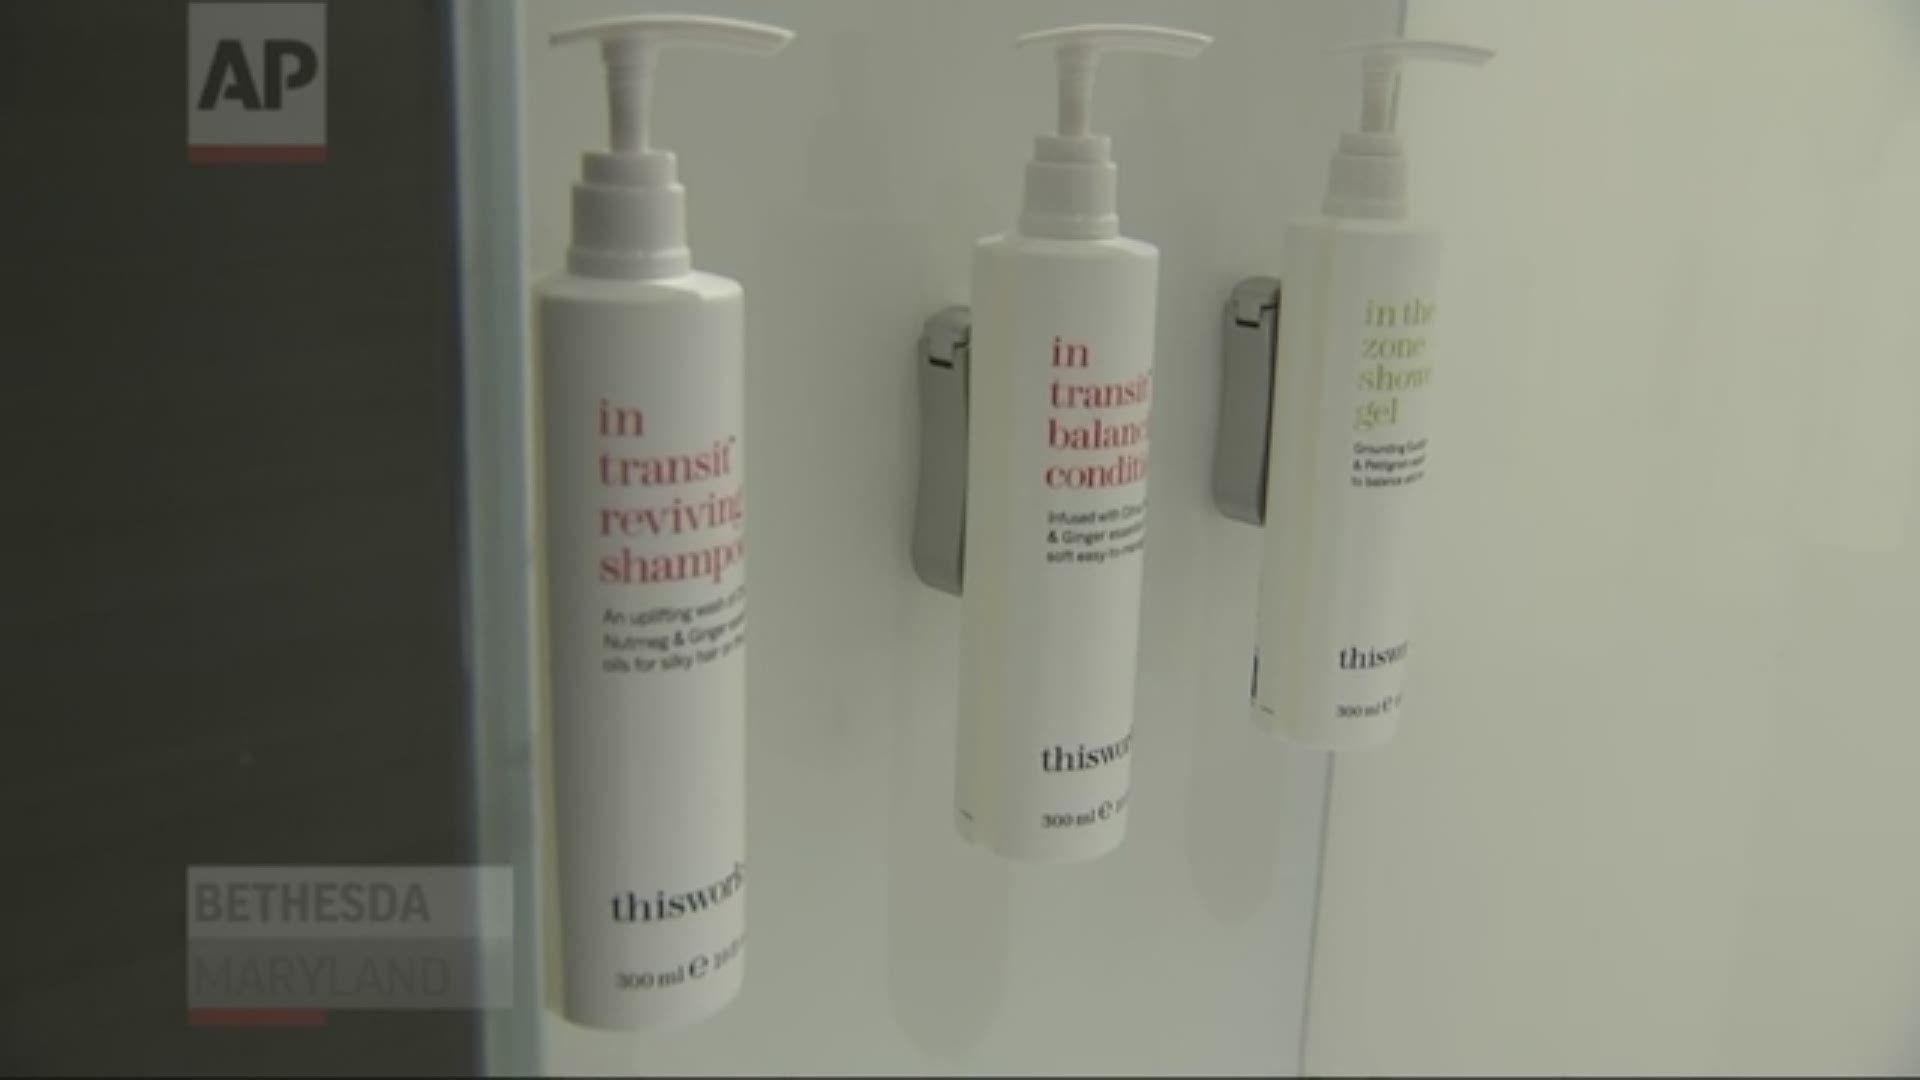 Marriott hotels eliminating little shampoo bottles | wtol.com